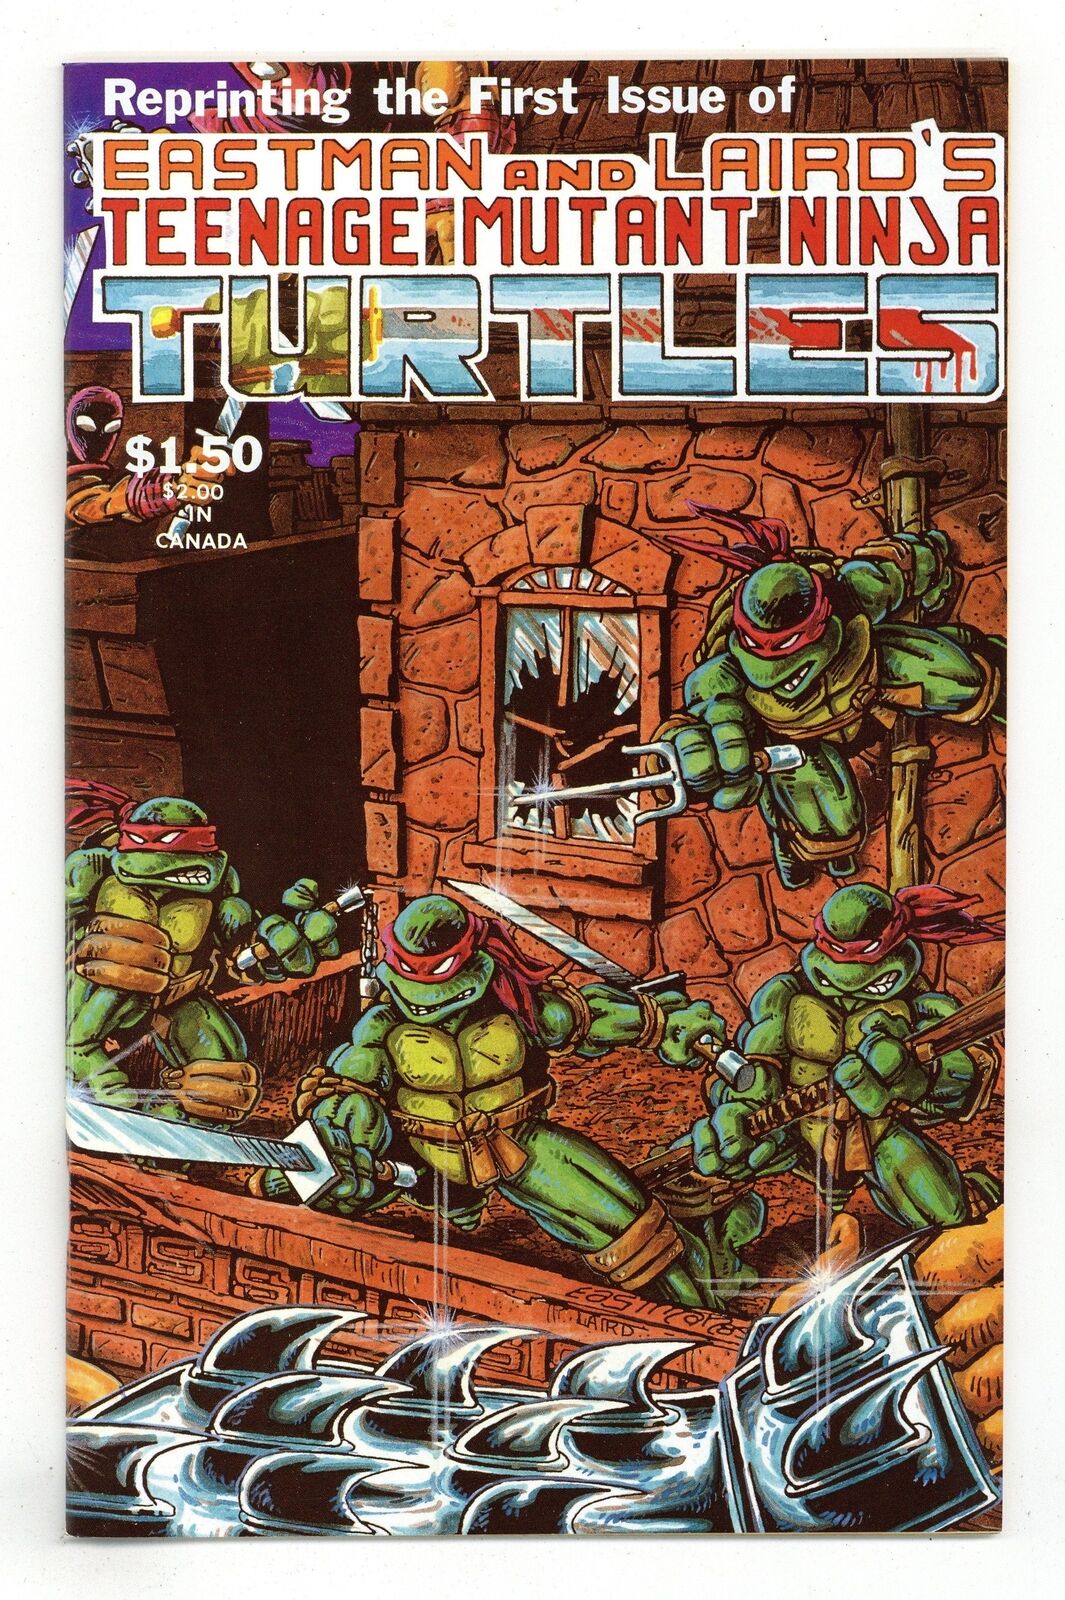 Teenage Mutant Ninja Turtles #1 New Wrp Full Color 4th Printing FN+ 6.5 1985